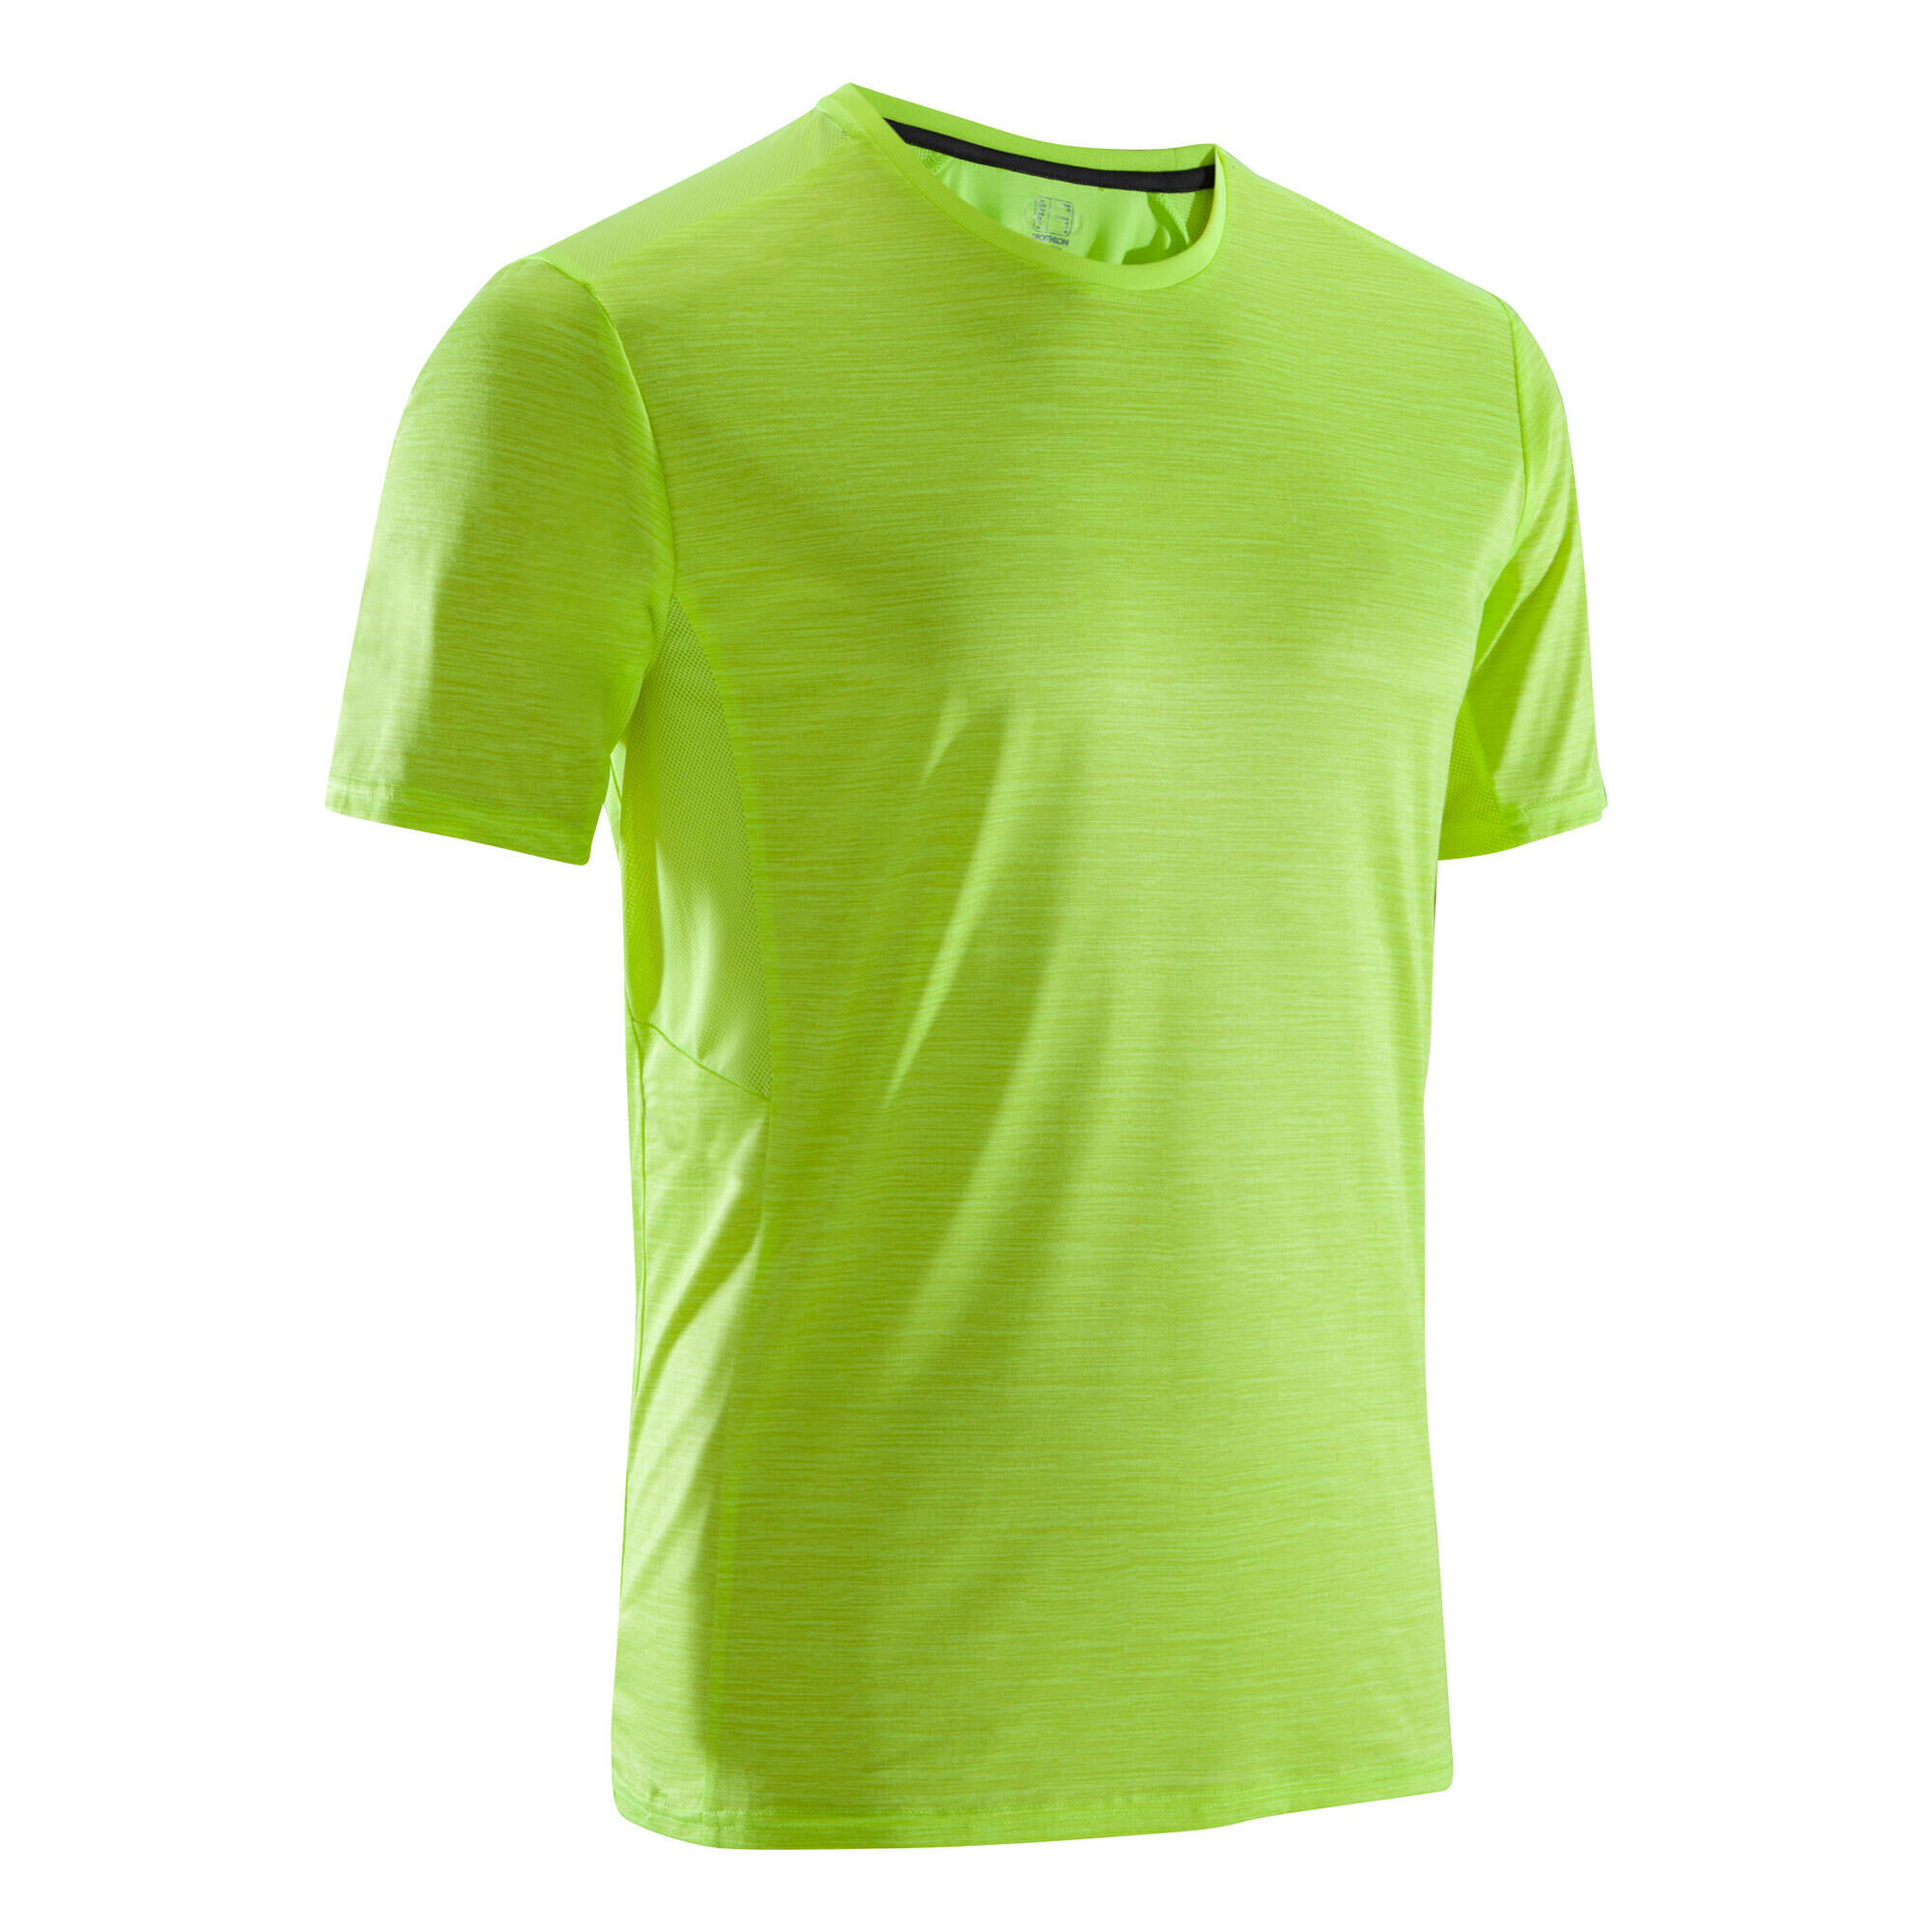 KIPRUN Dry+ men's breathable running T-shirt - yellow